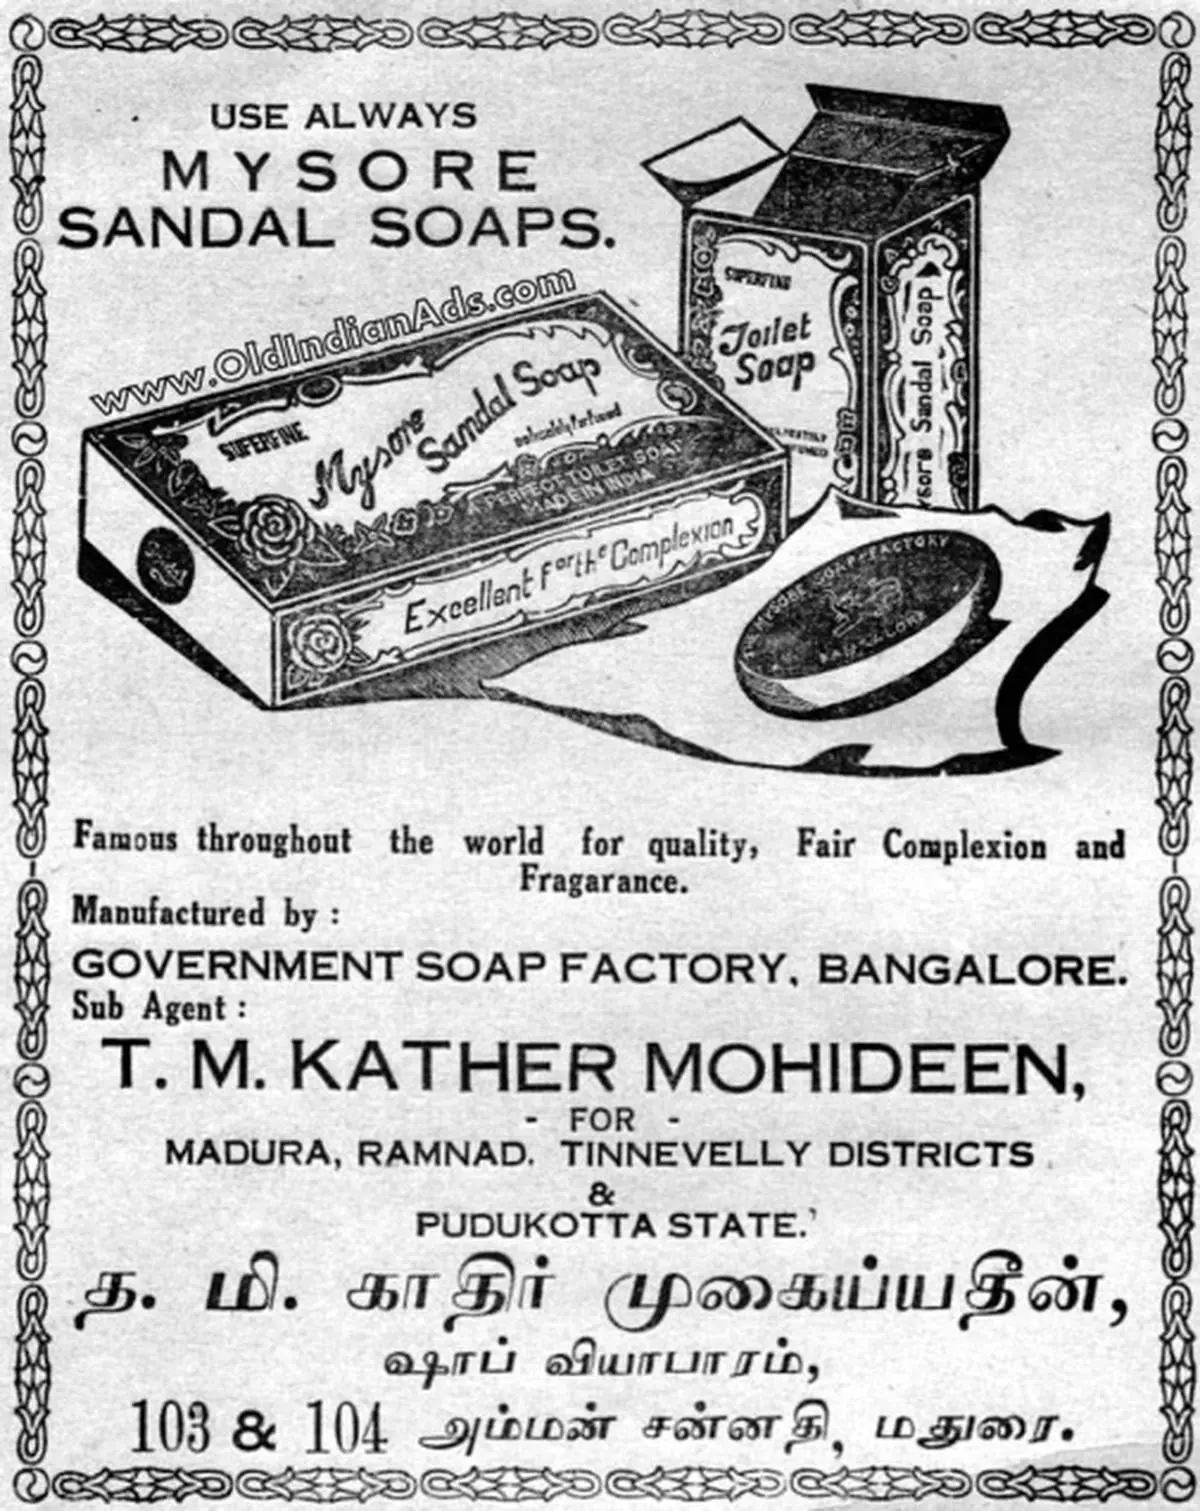 Patanjali Saundarya Mysore Super Sandal Body Cleanser 75 G | KAPOOR AND SONS